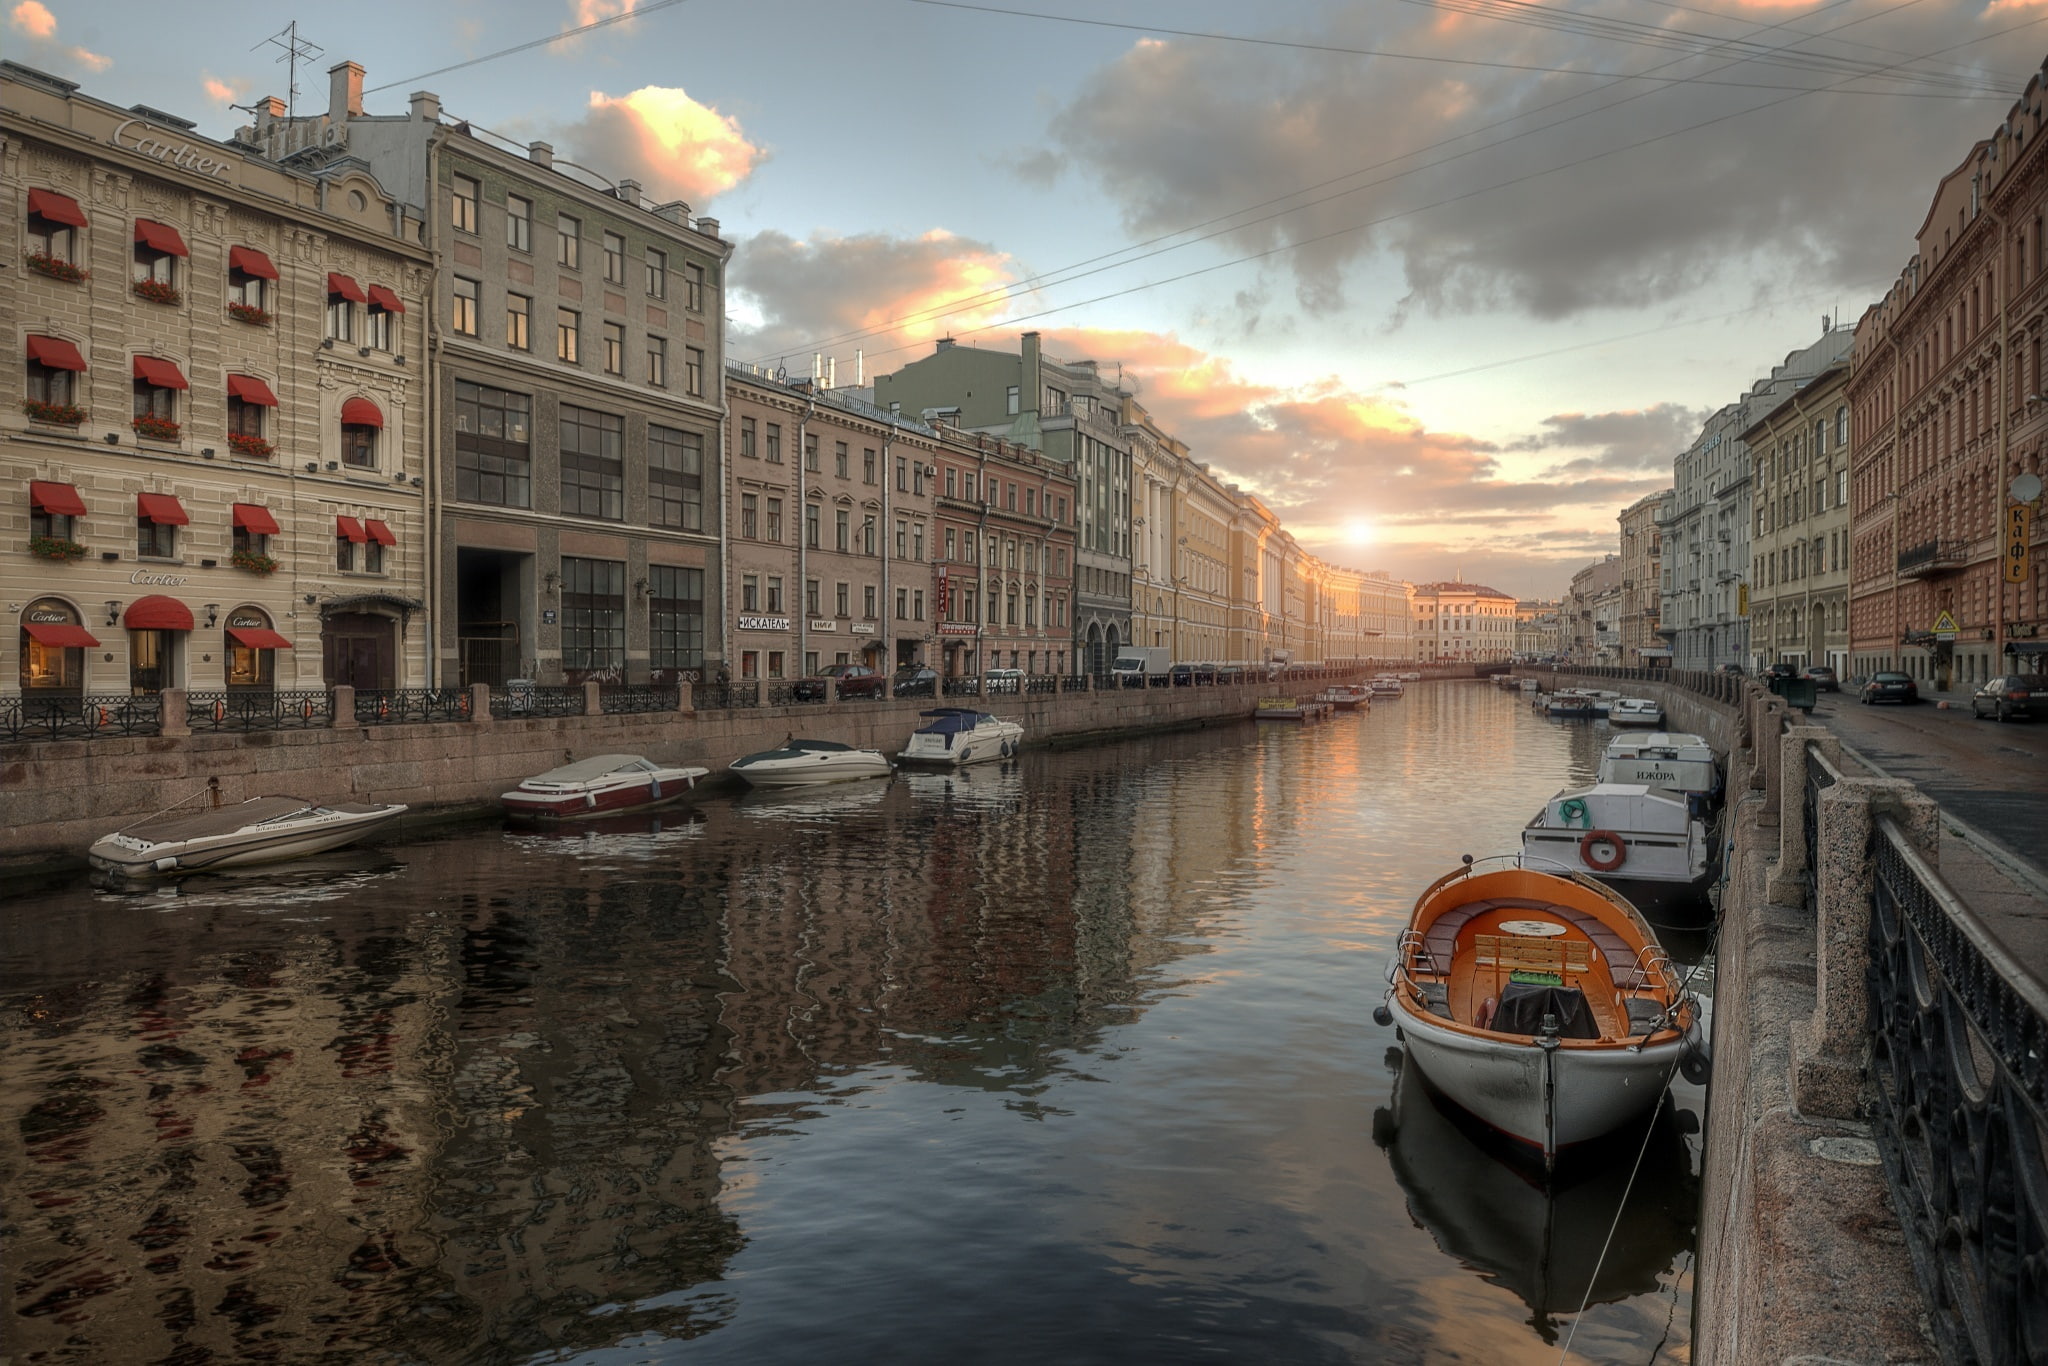 Grand Canal, Venice, Italy, channel, Peter, SPb, Leningrad